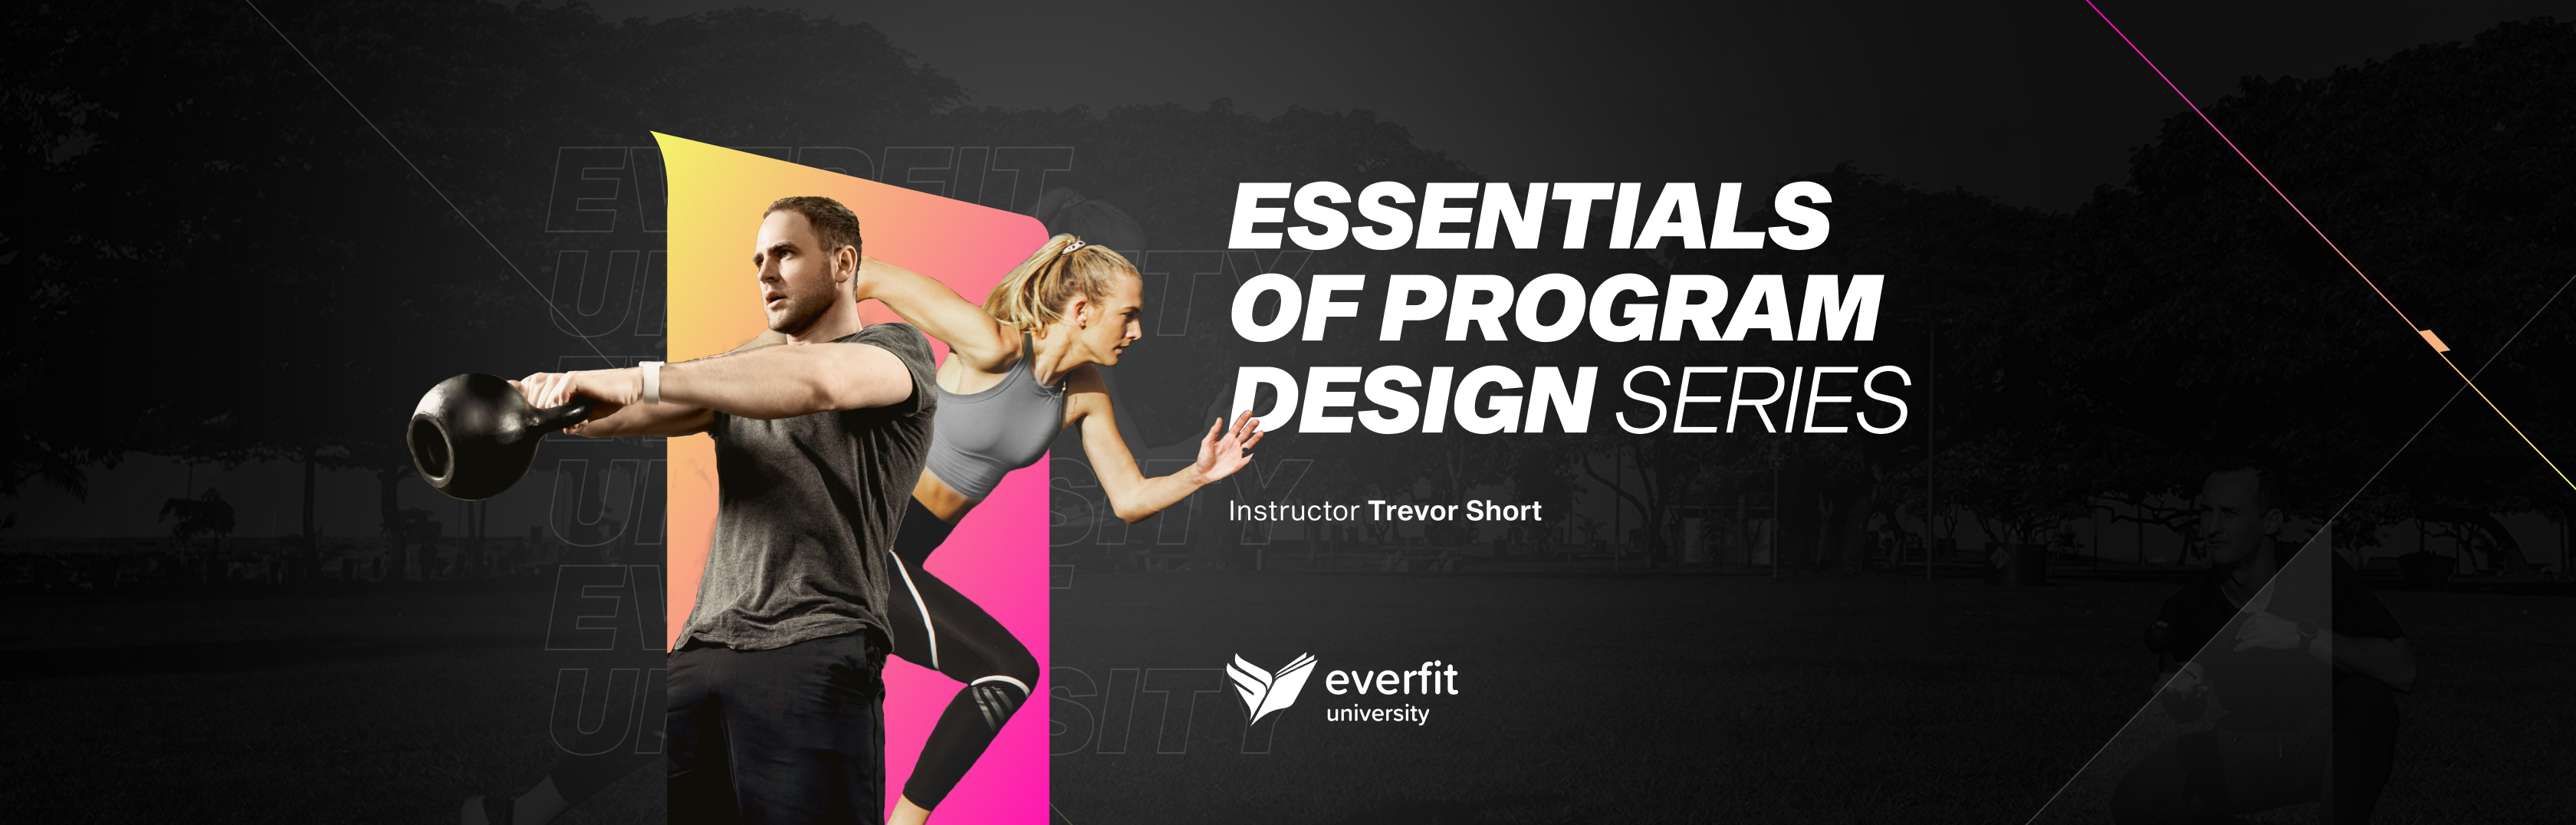 “Essentials of Program Design” Overview by Trevor Short